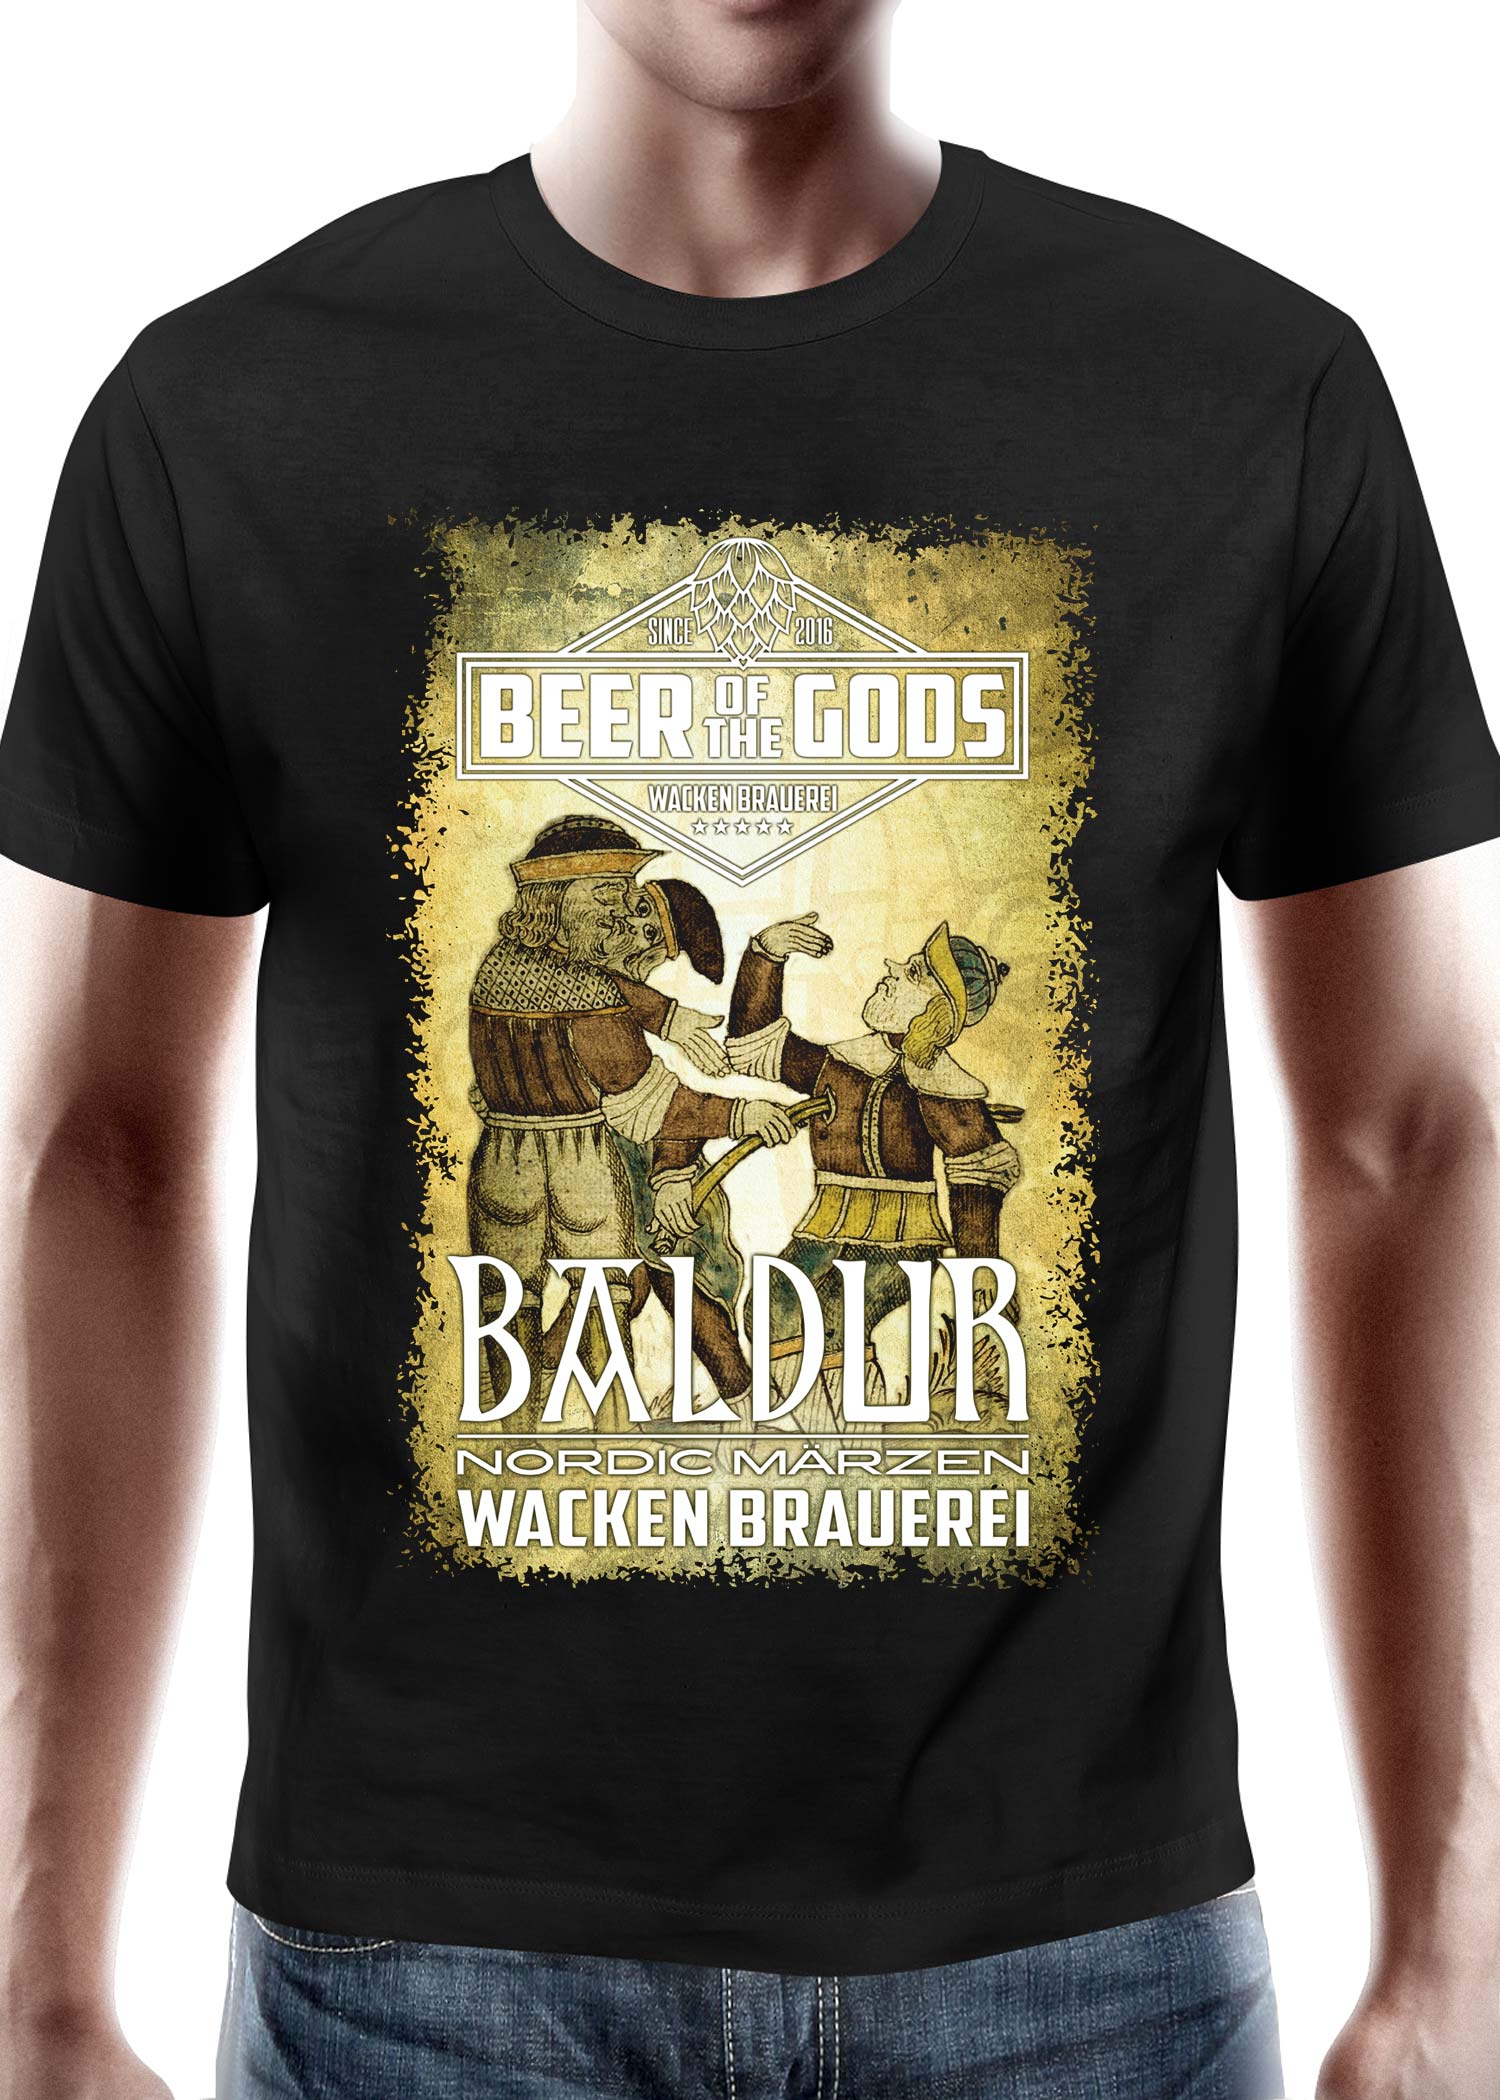 Baldur - Wacken Brauerei, T-Shirt, Größe L